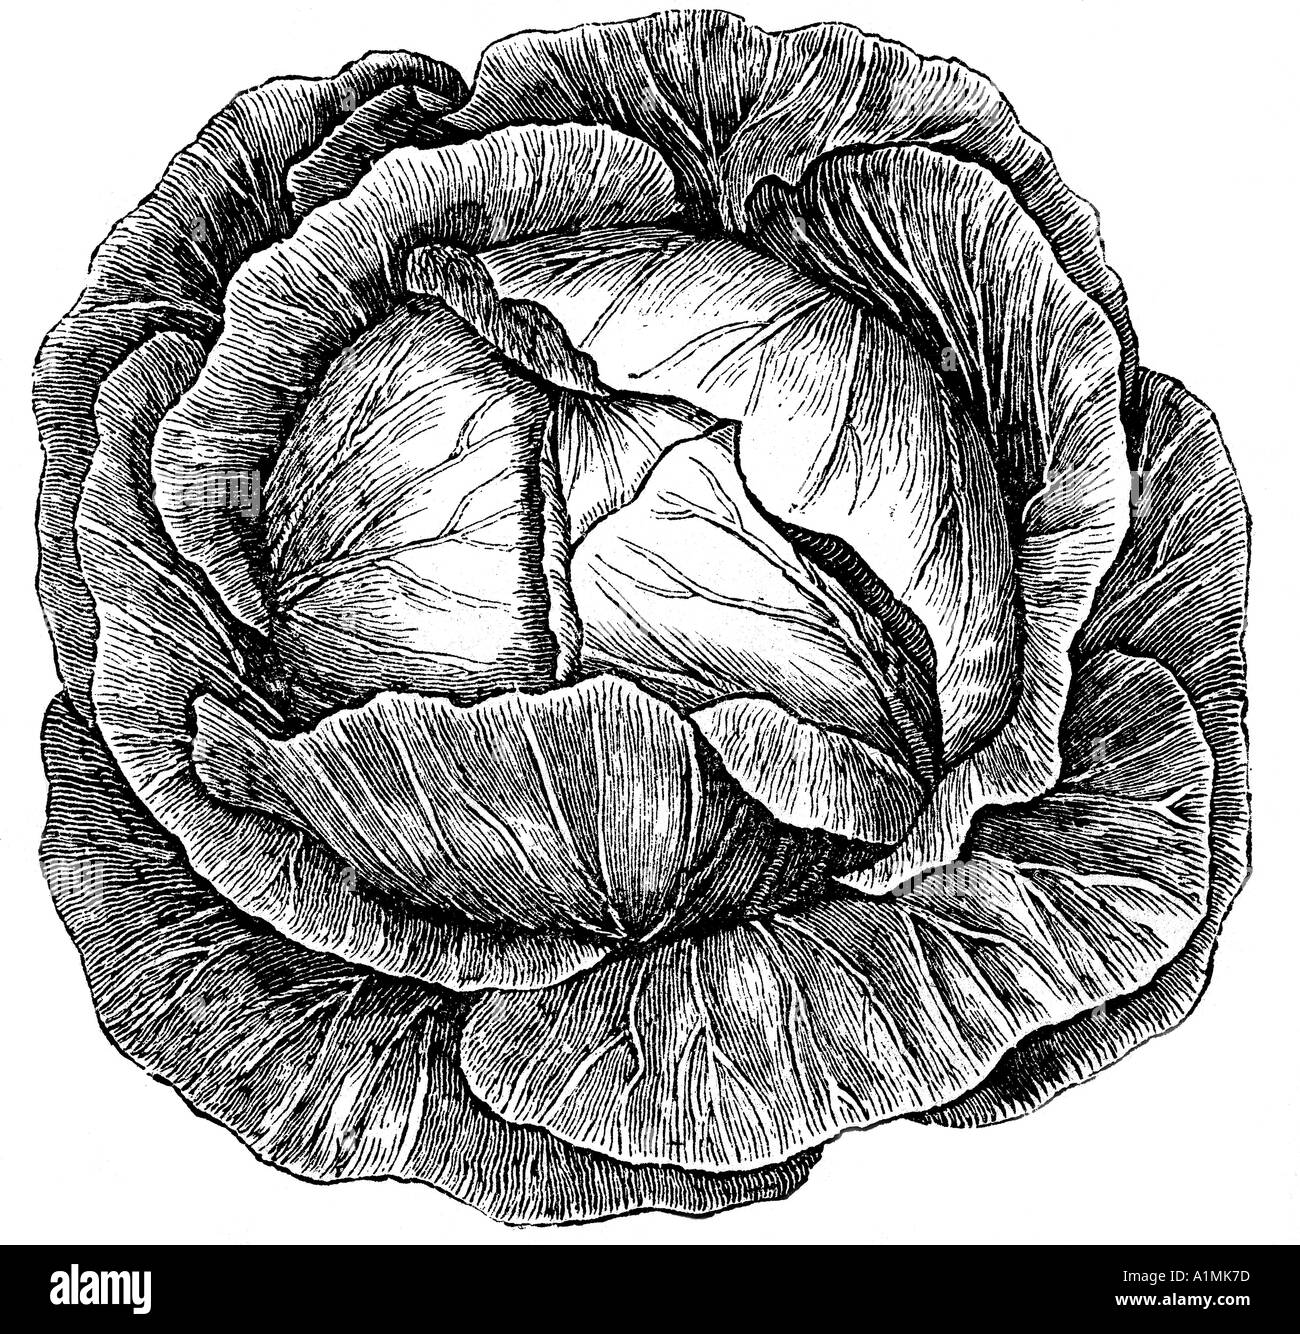 White cabbage illustration Stock Photo